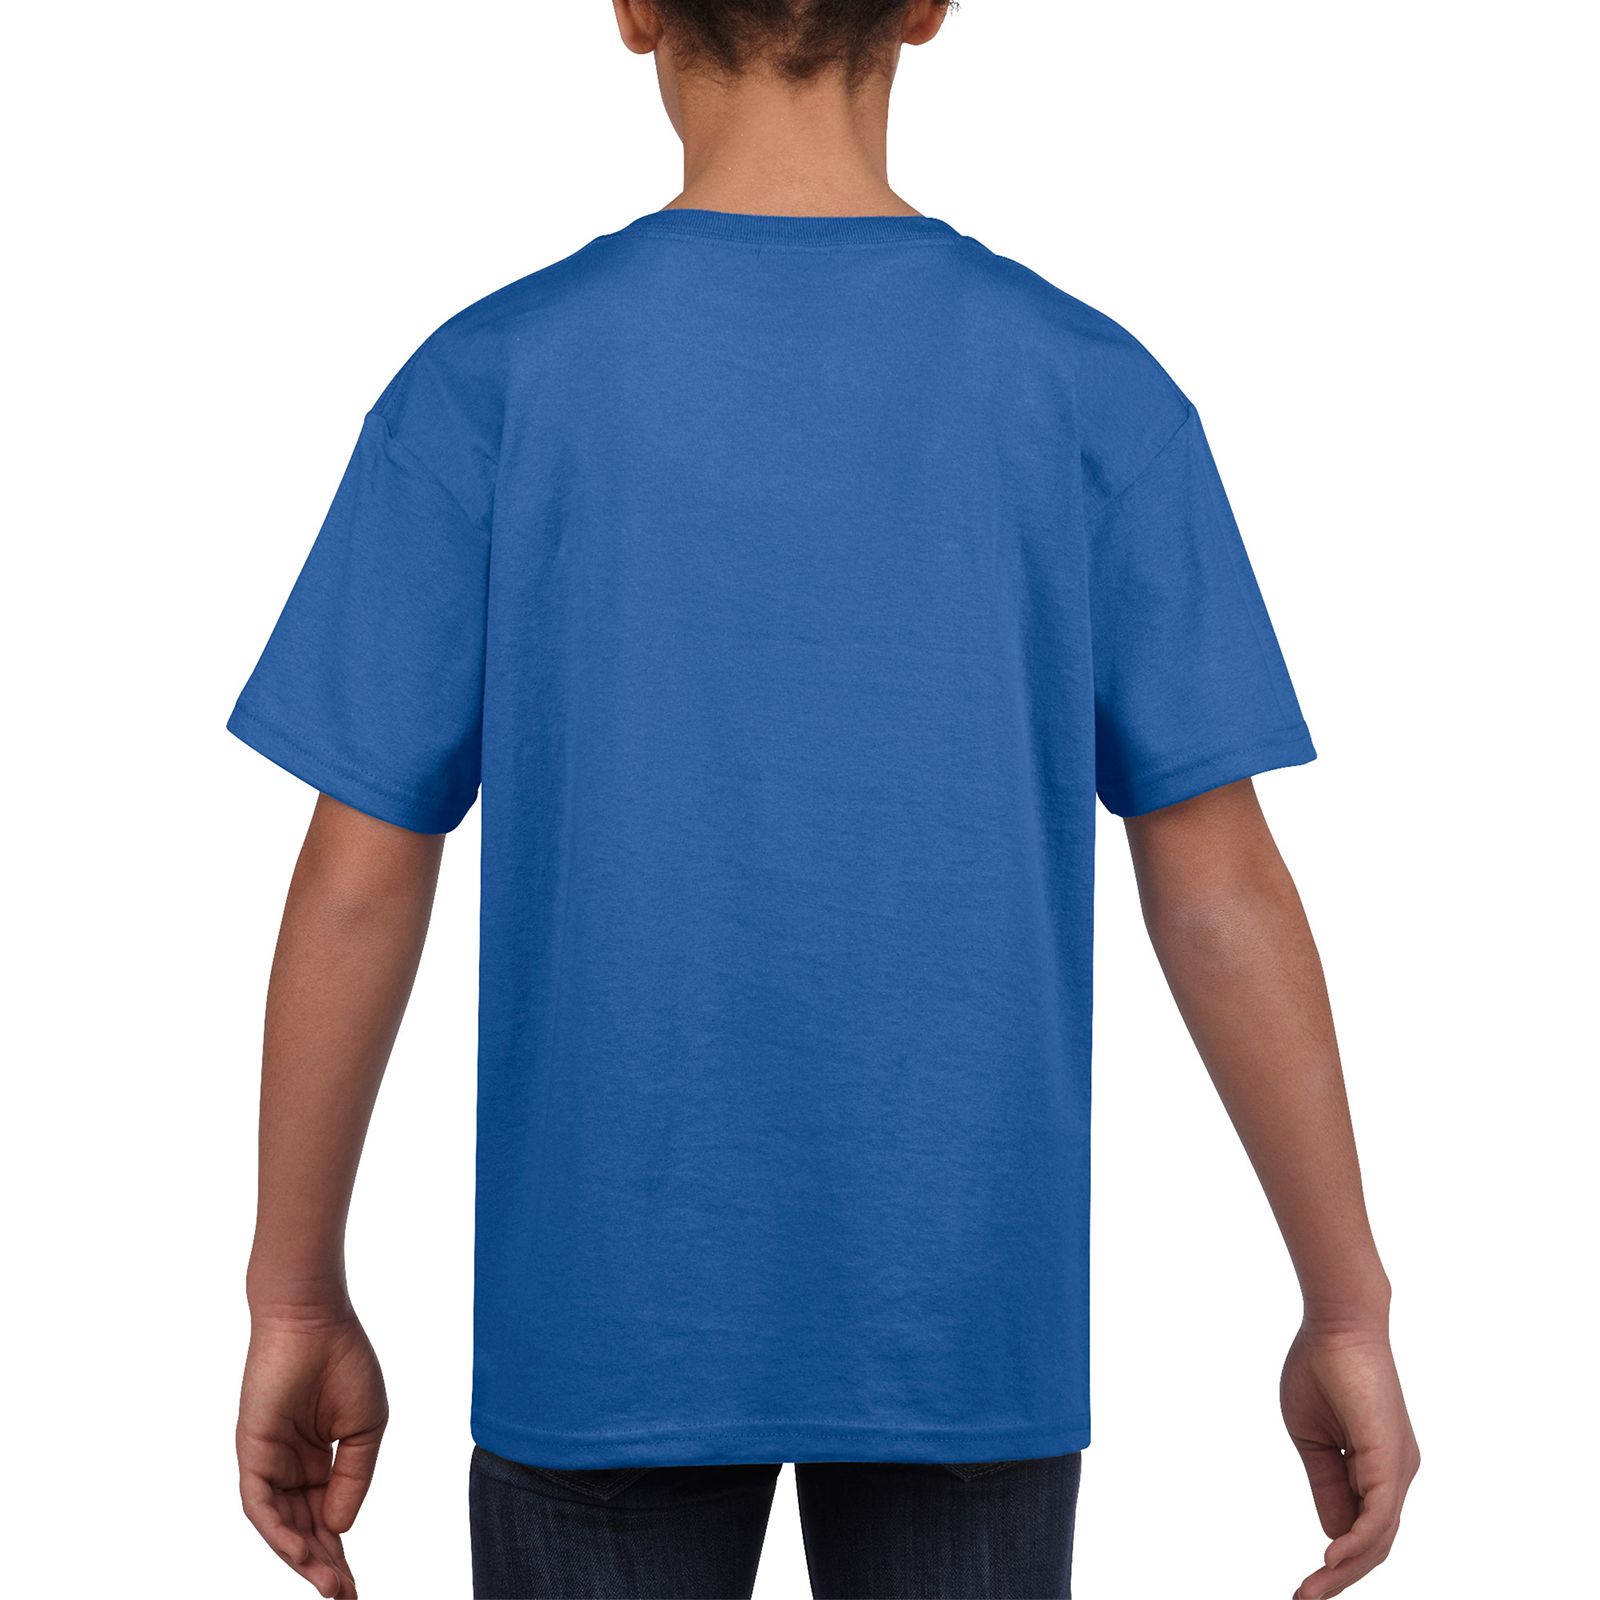 Children's T-shirt SoftStyle JN 153